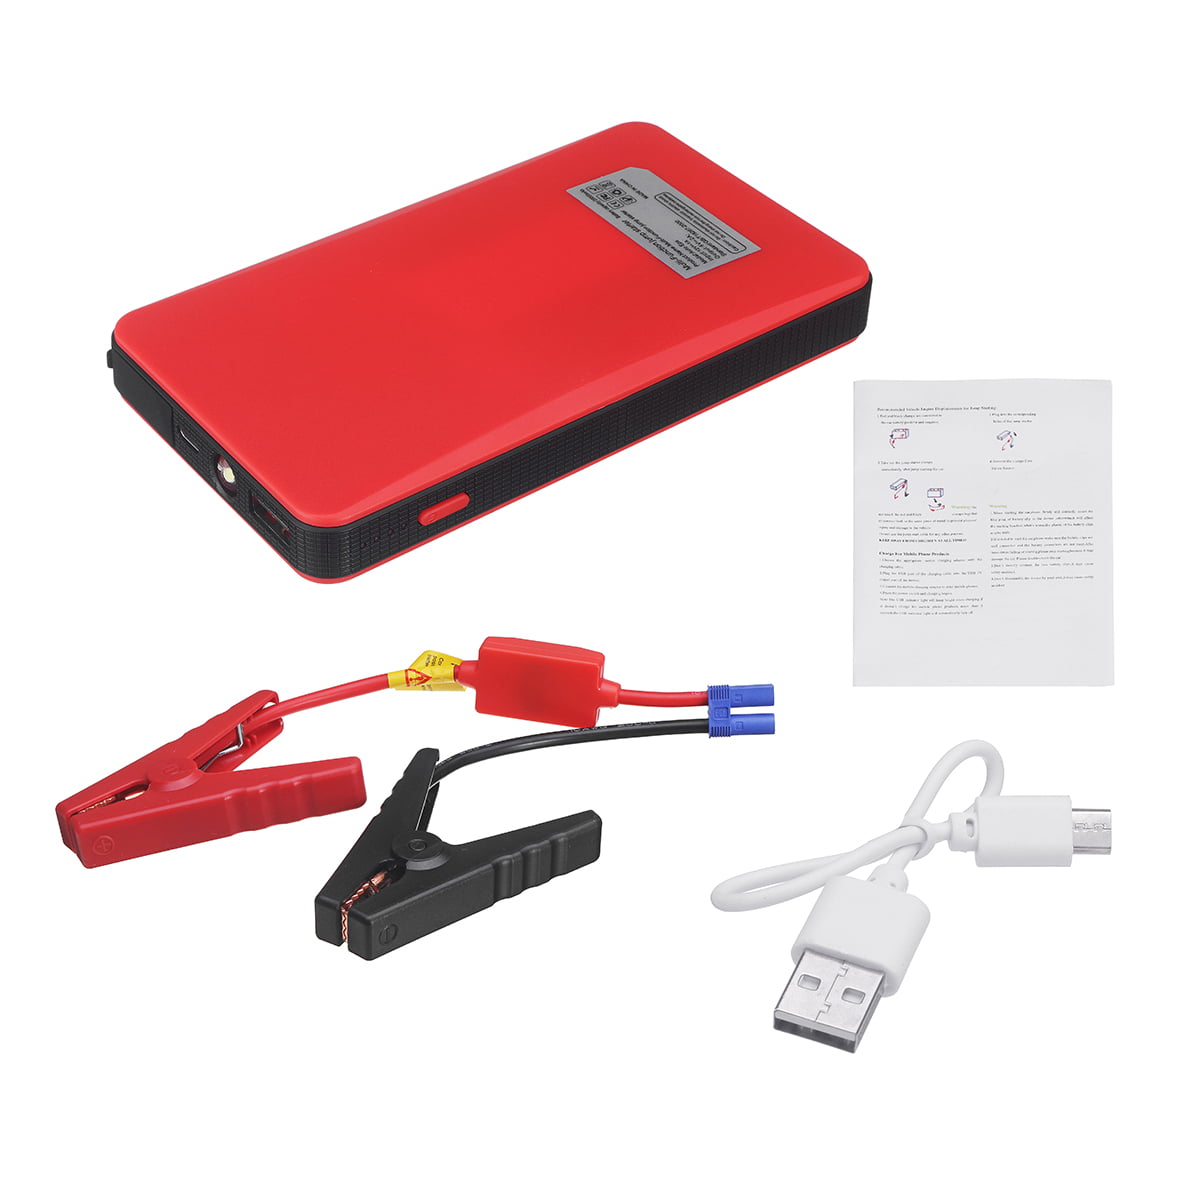 4USB Portable Jump Starter Car Battery Charger Mini Power Bank LED Light USPS 